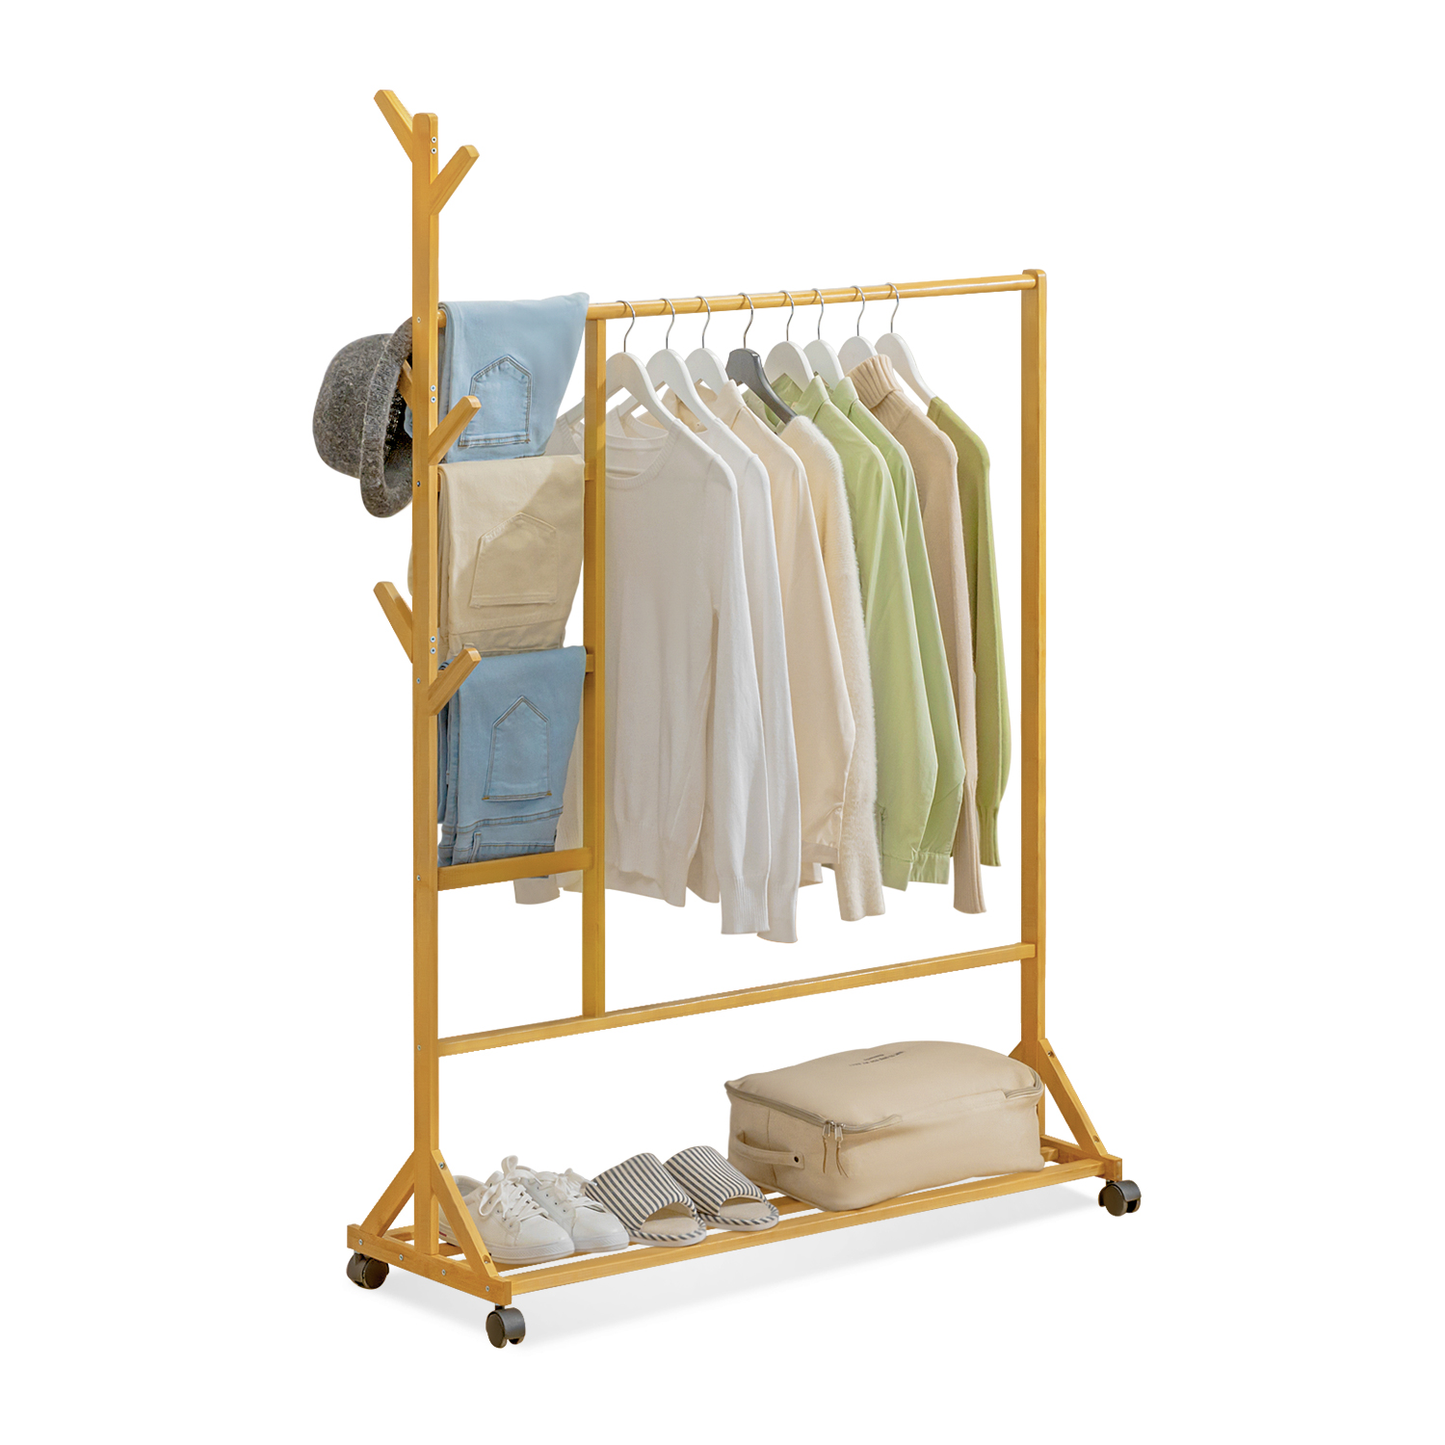 Sliding Garment Clothes Rack - with Pants Rack - Unequal Top